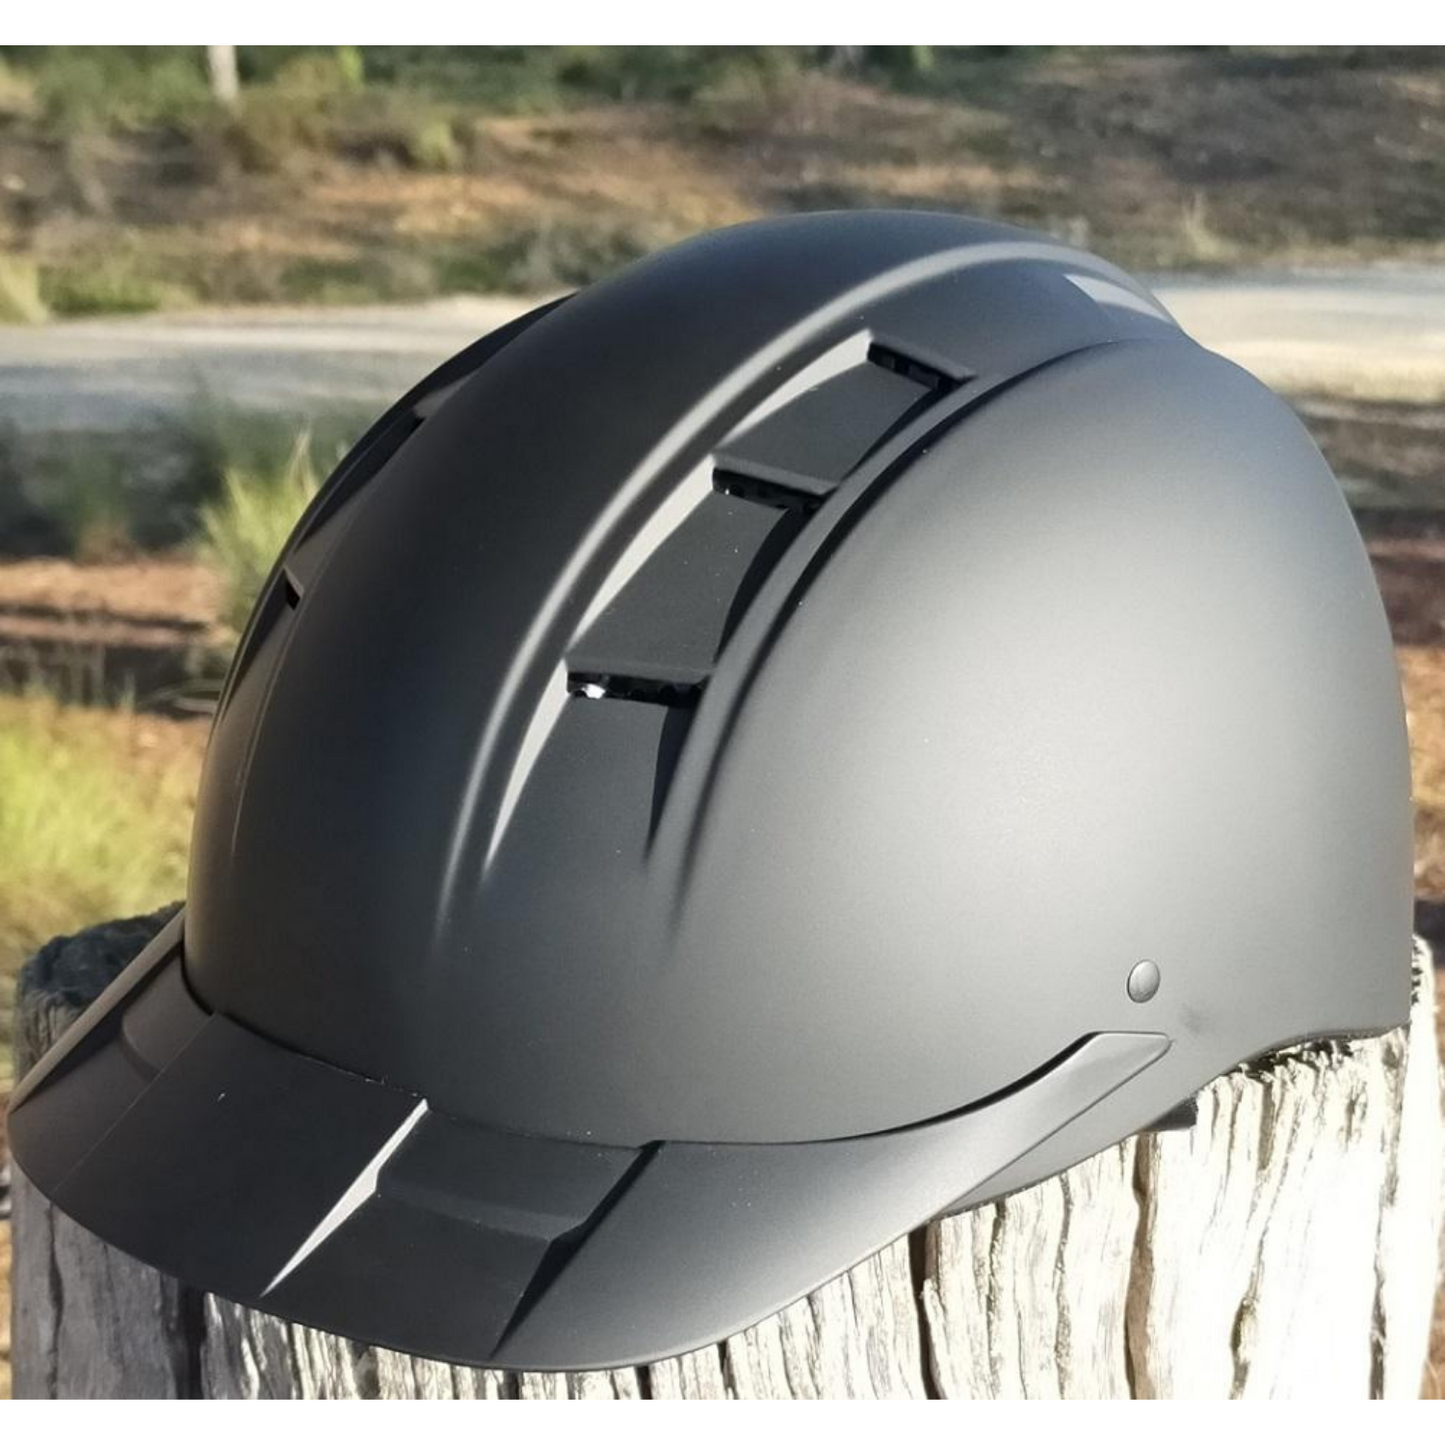 Eurohunter Freedom Lite Helmet